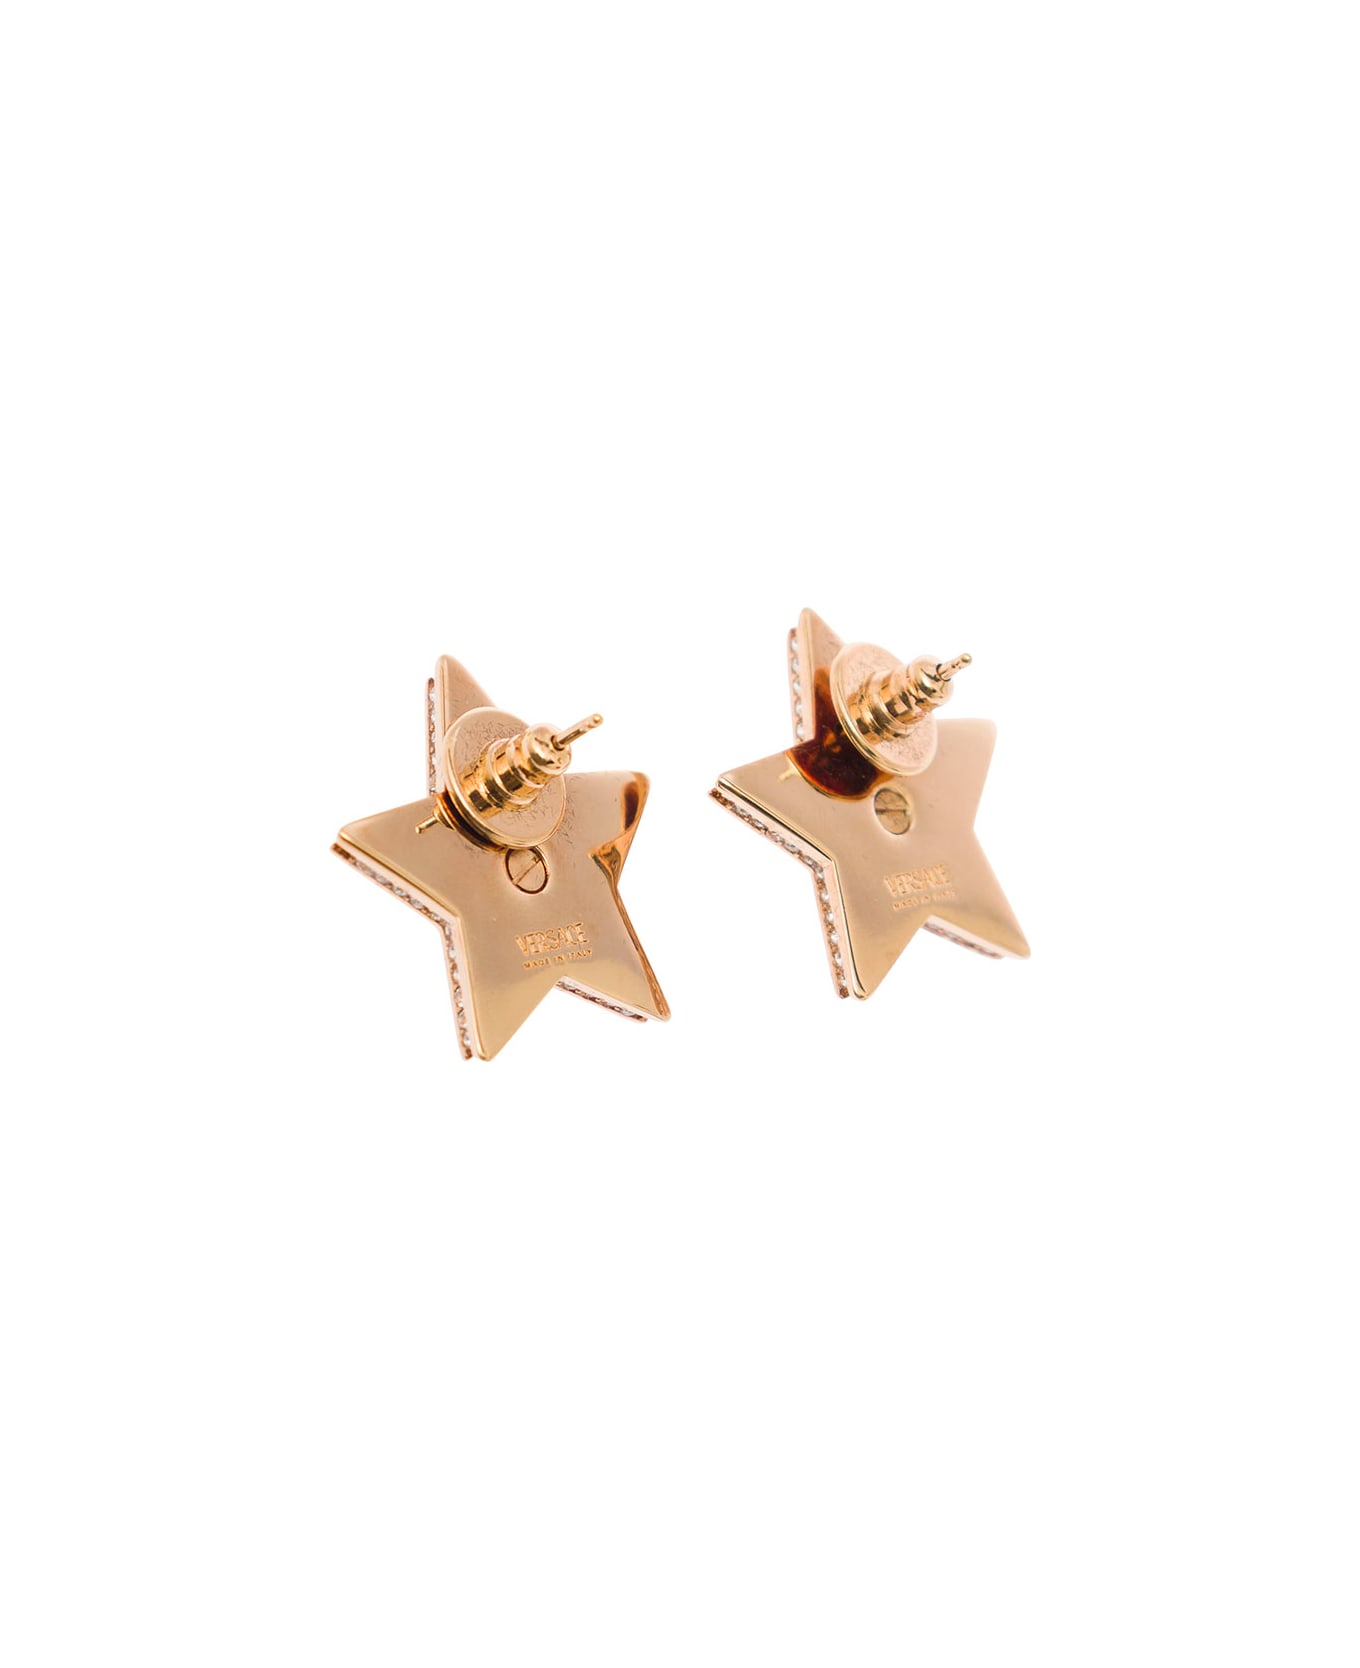 Versace Gold-colored Star Earrings With Medusa In Metal Woman - Metallic イヤリング